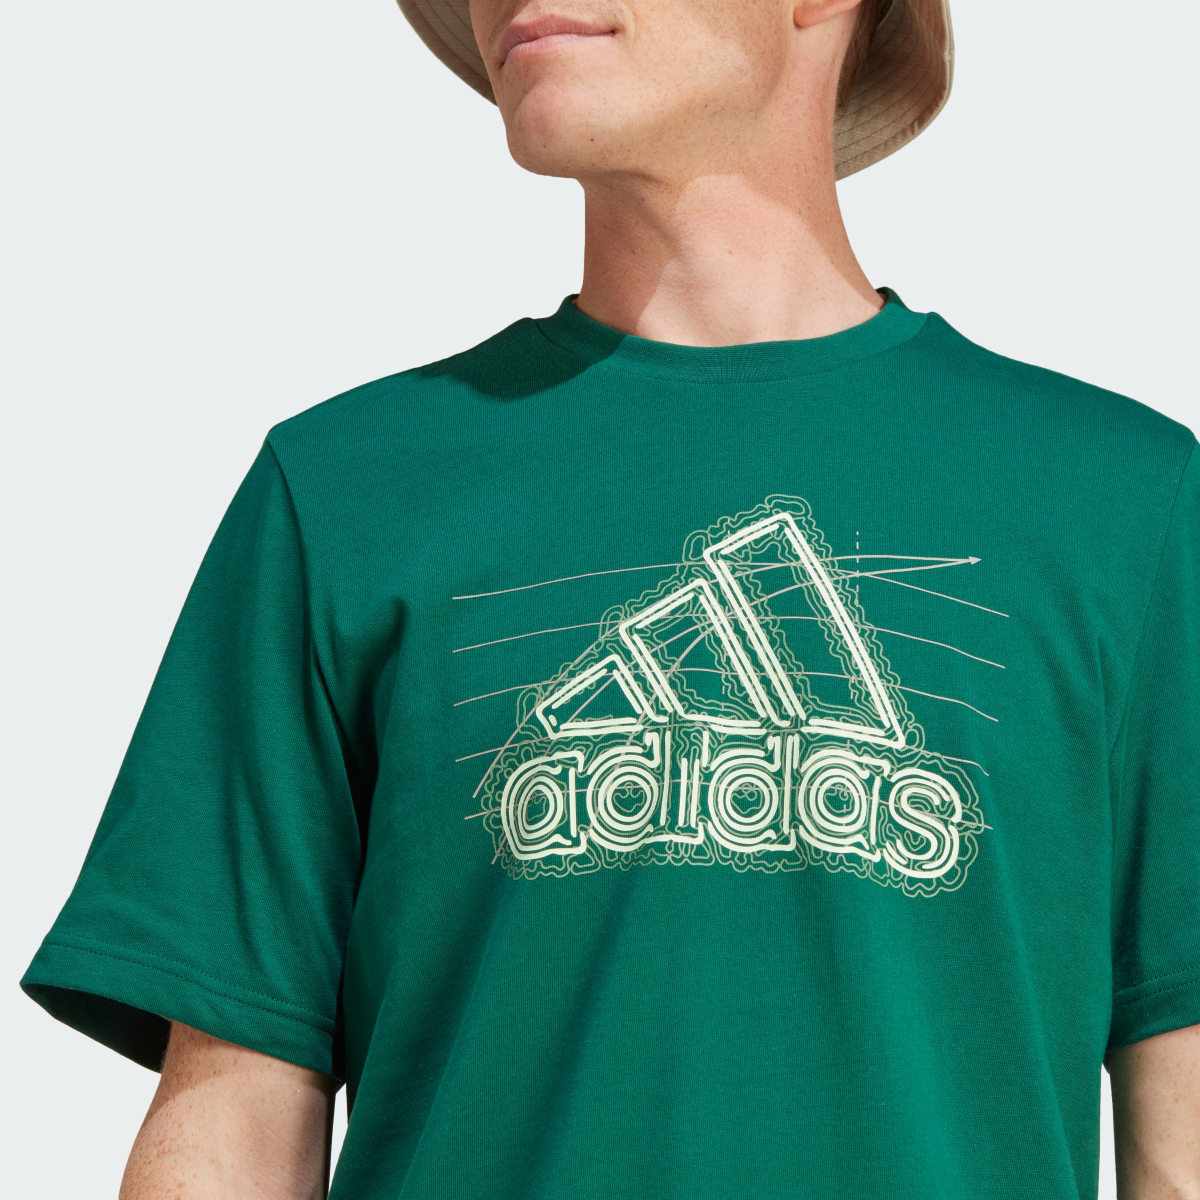 Adidas Growth Badge Graphic T-Shirt. 7